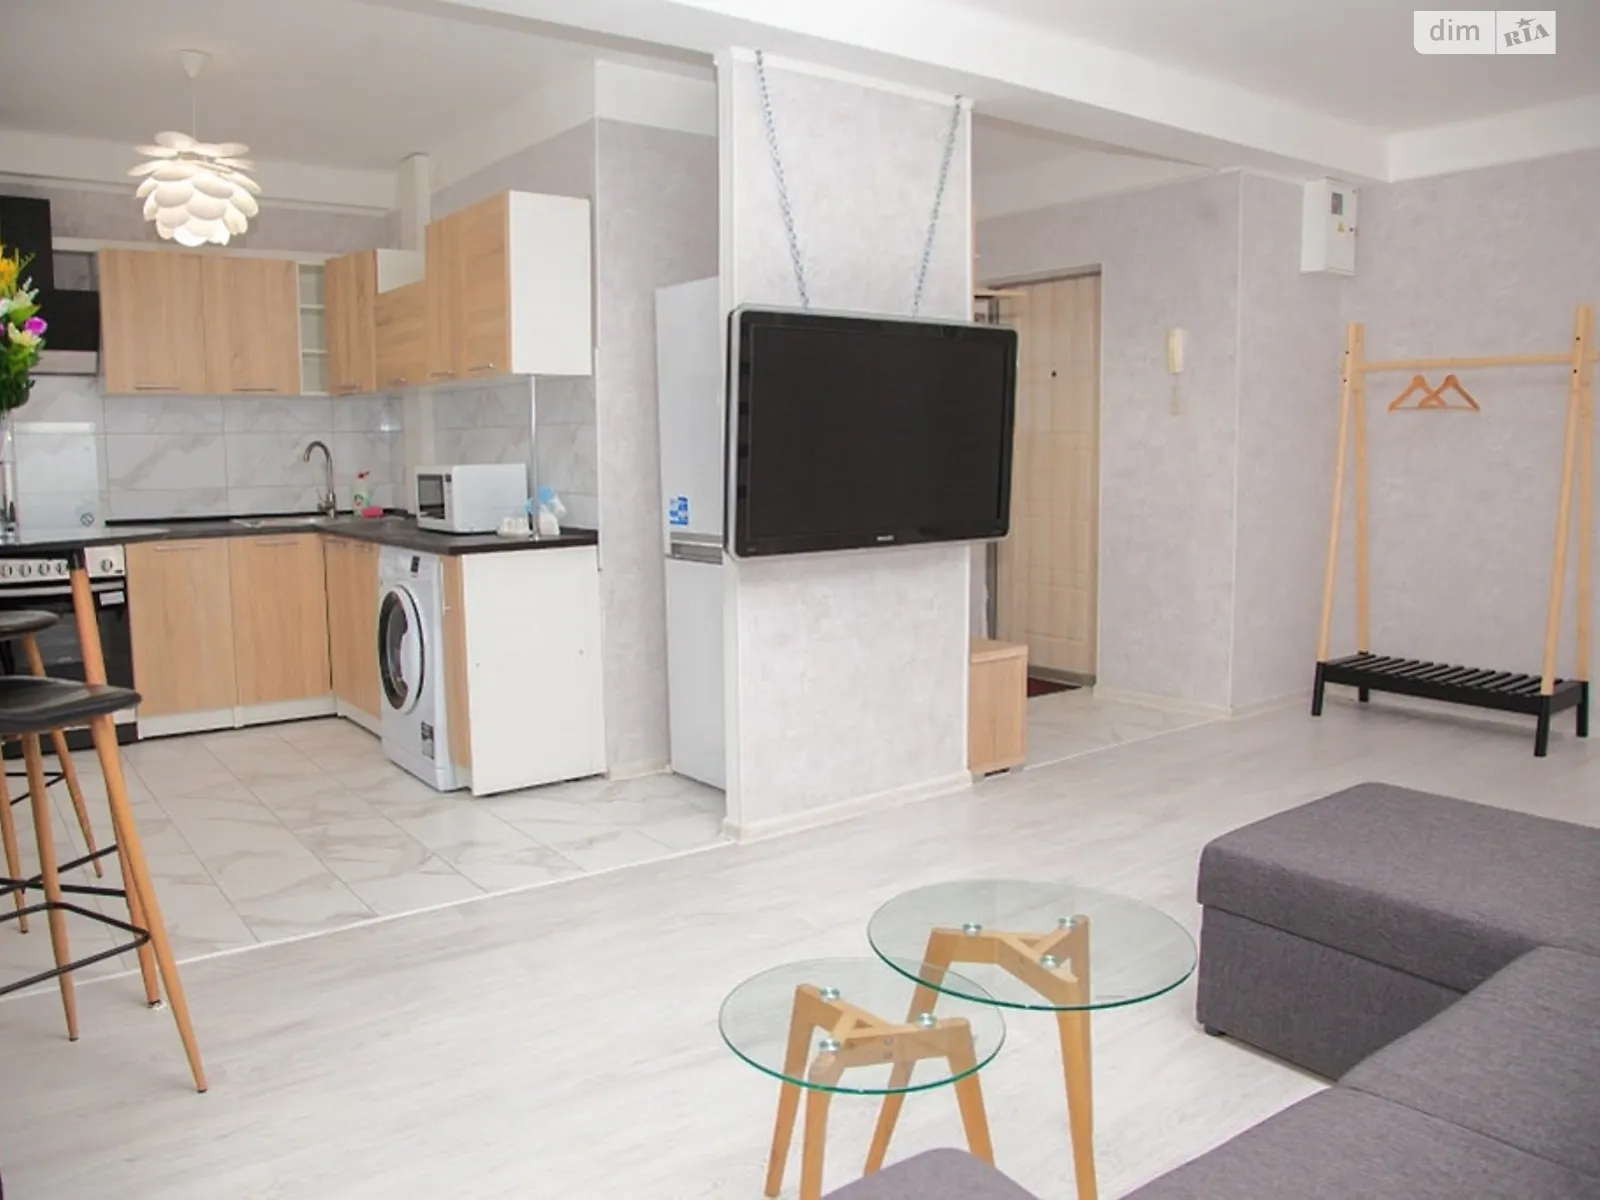 2-кімнатна квартира у Запоріжжі, цена: 1200 грн